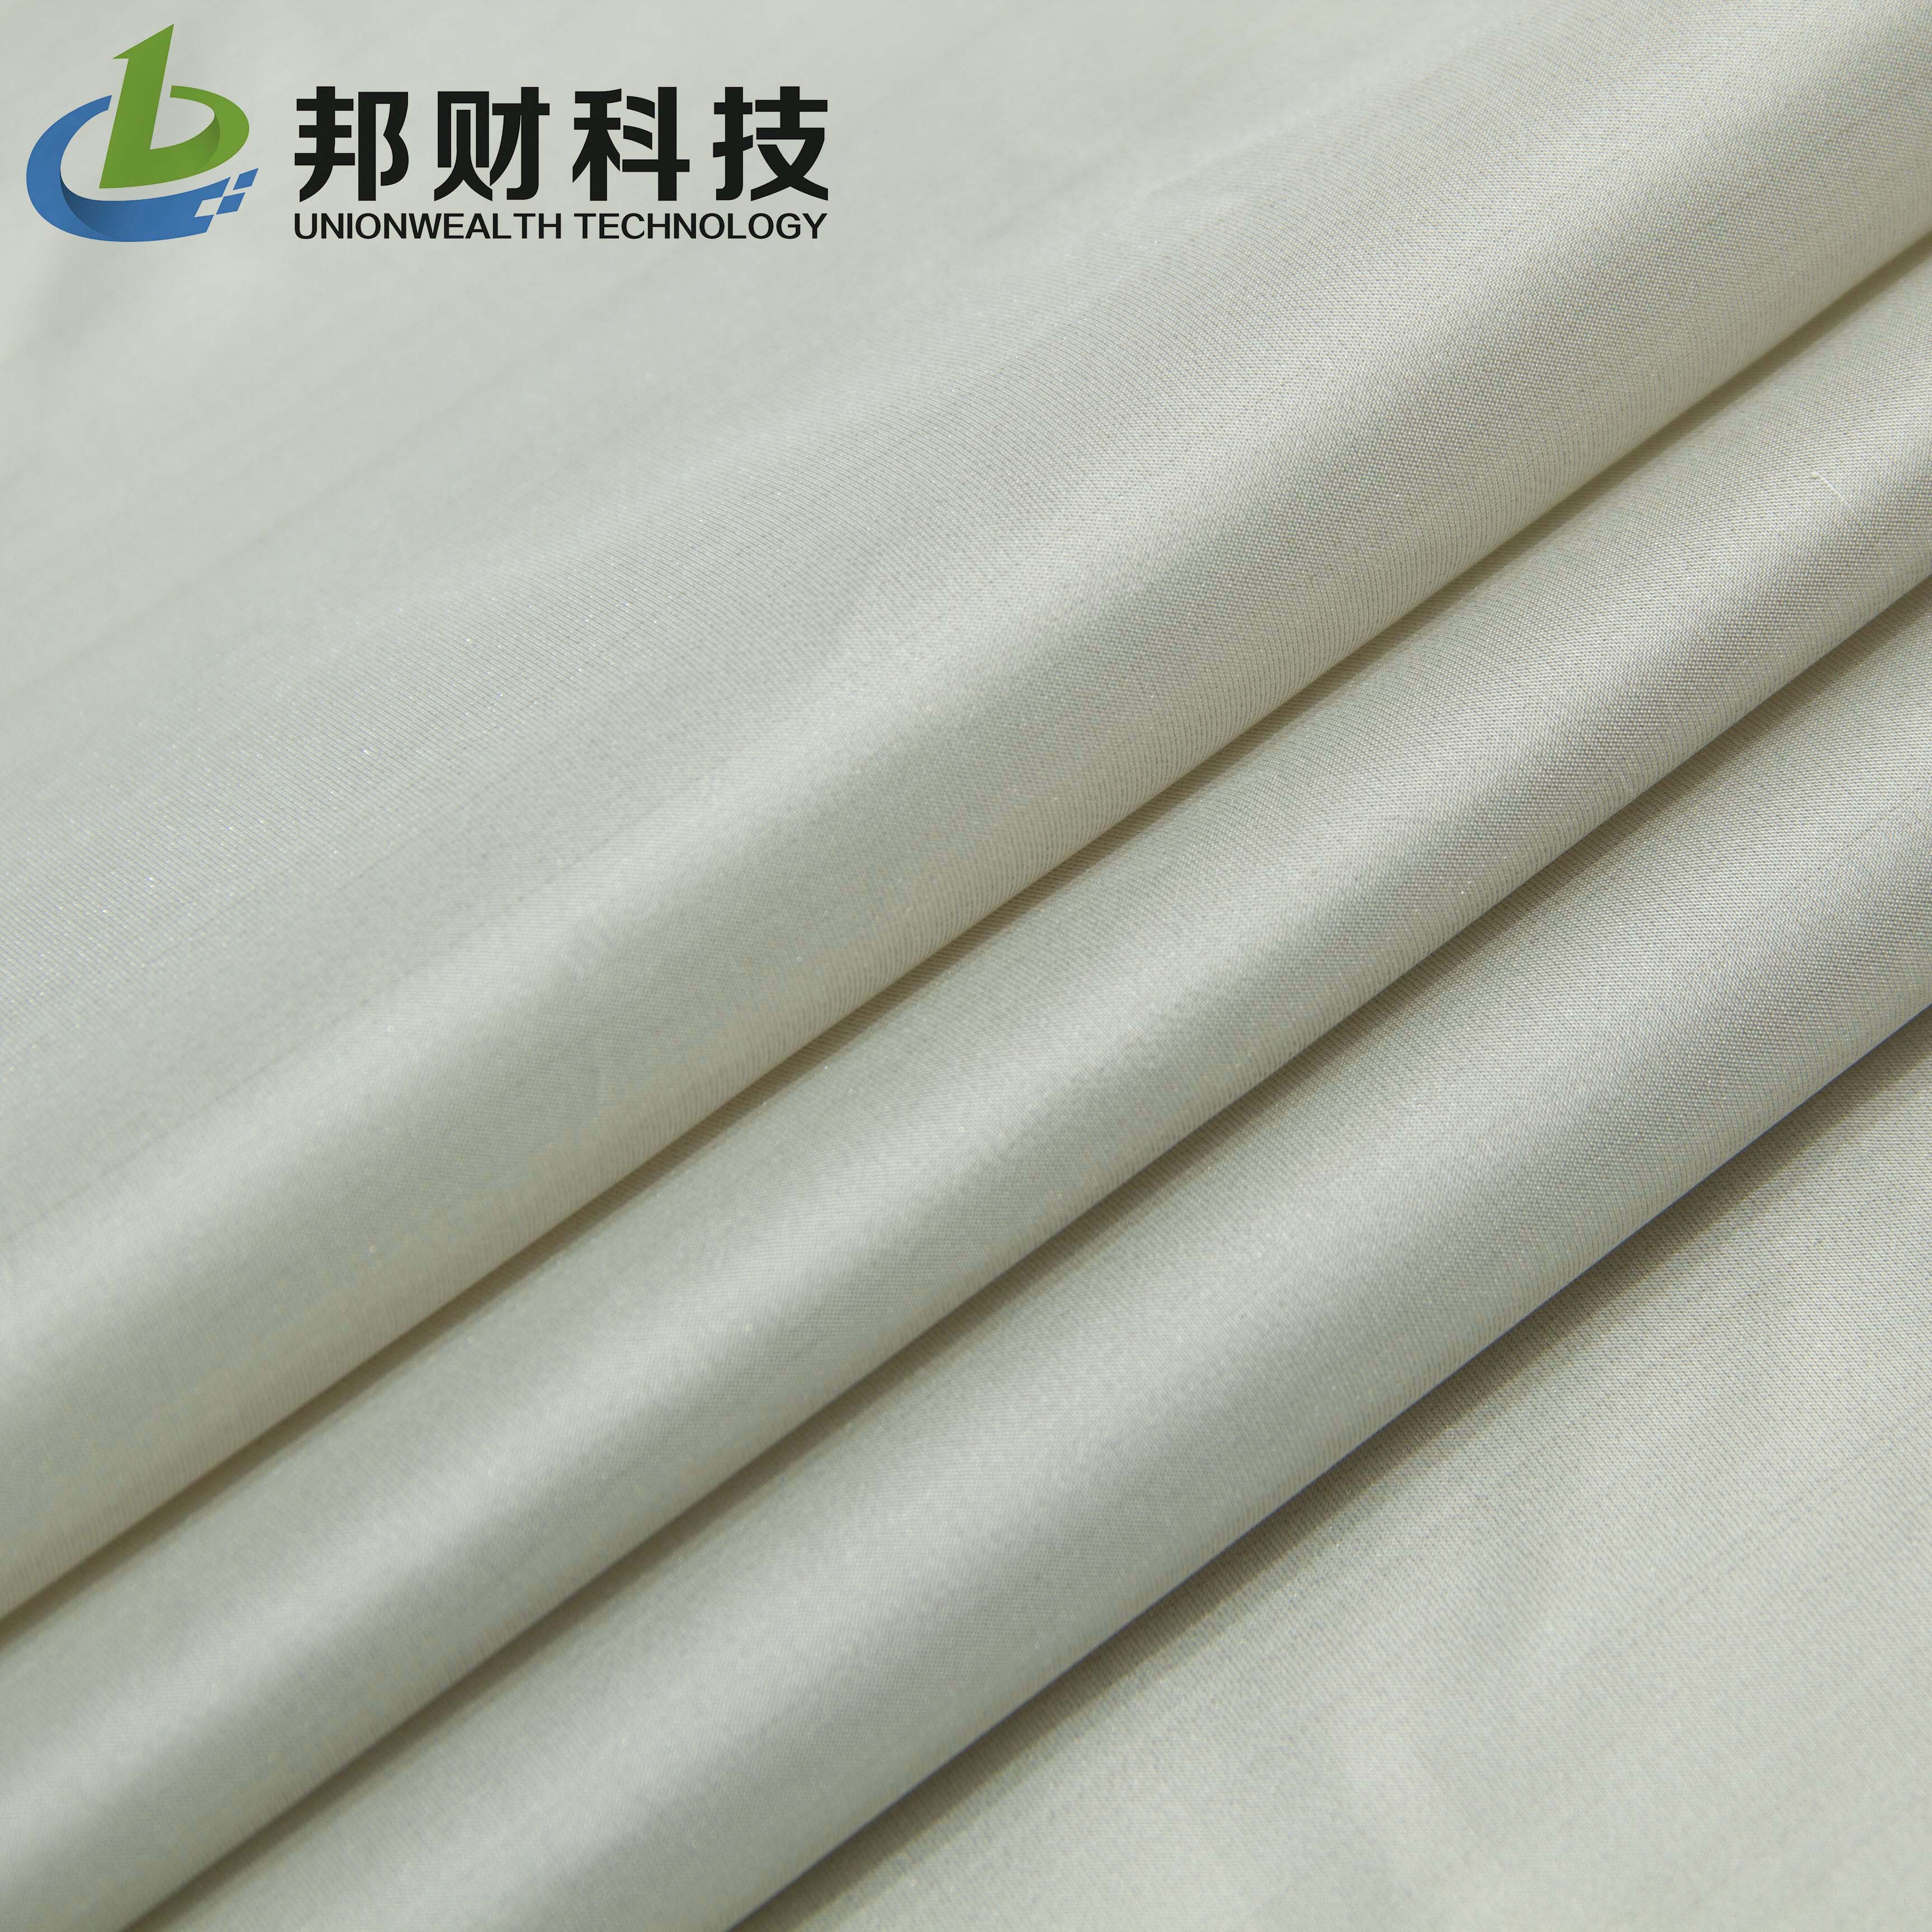  Mulberry silk silver fiber interwoven conductive electromagnetic wave shielding anti-radiation printed fabric